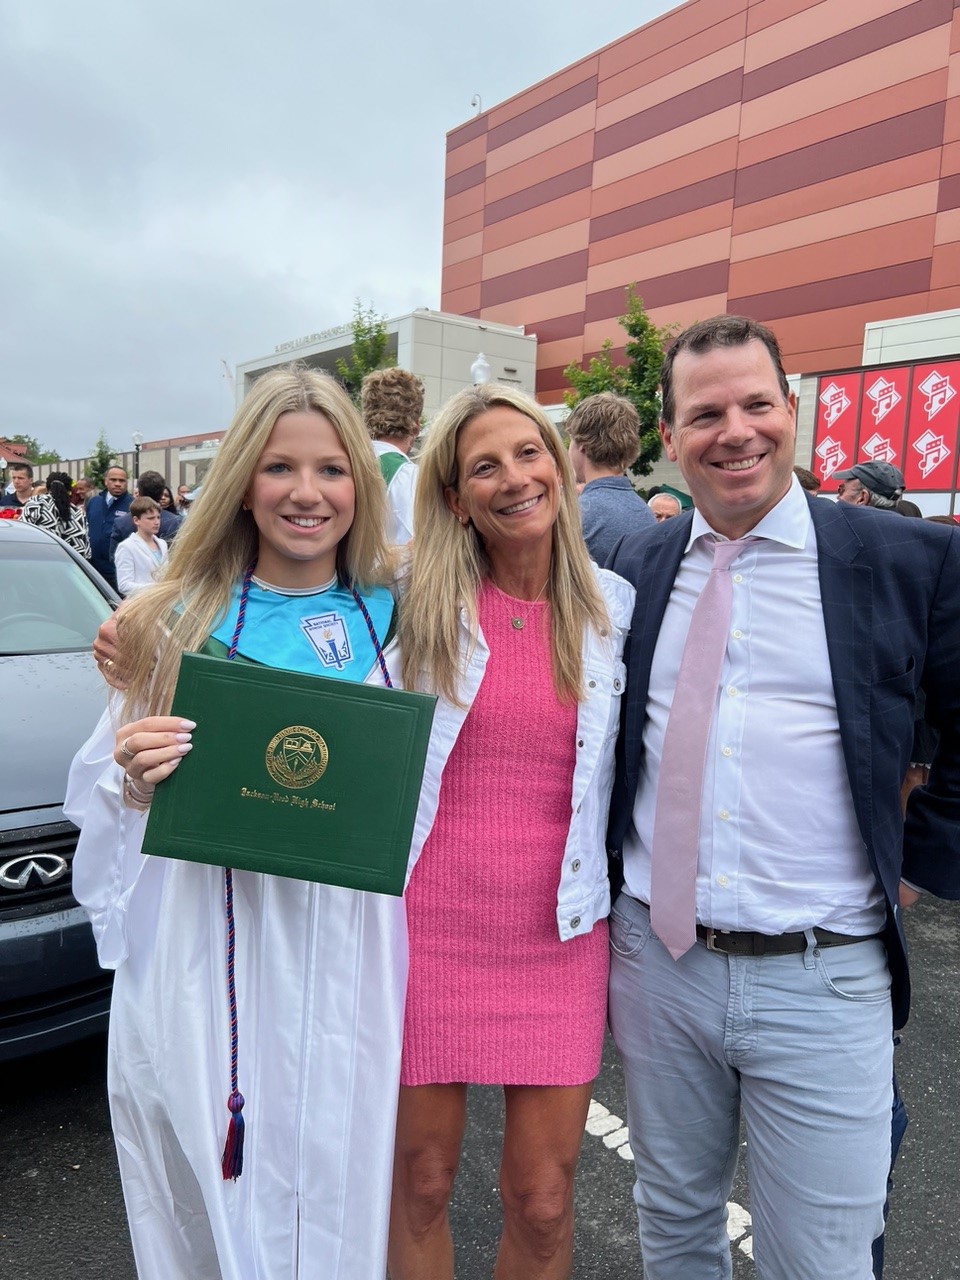 Craig at his daughter's graduation